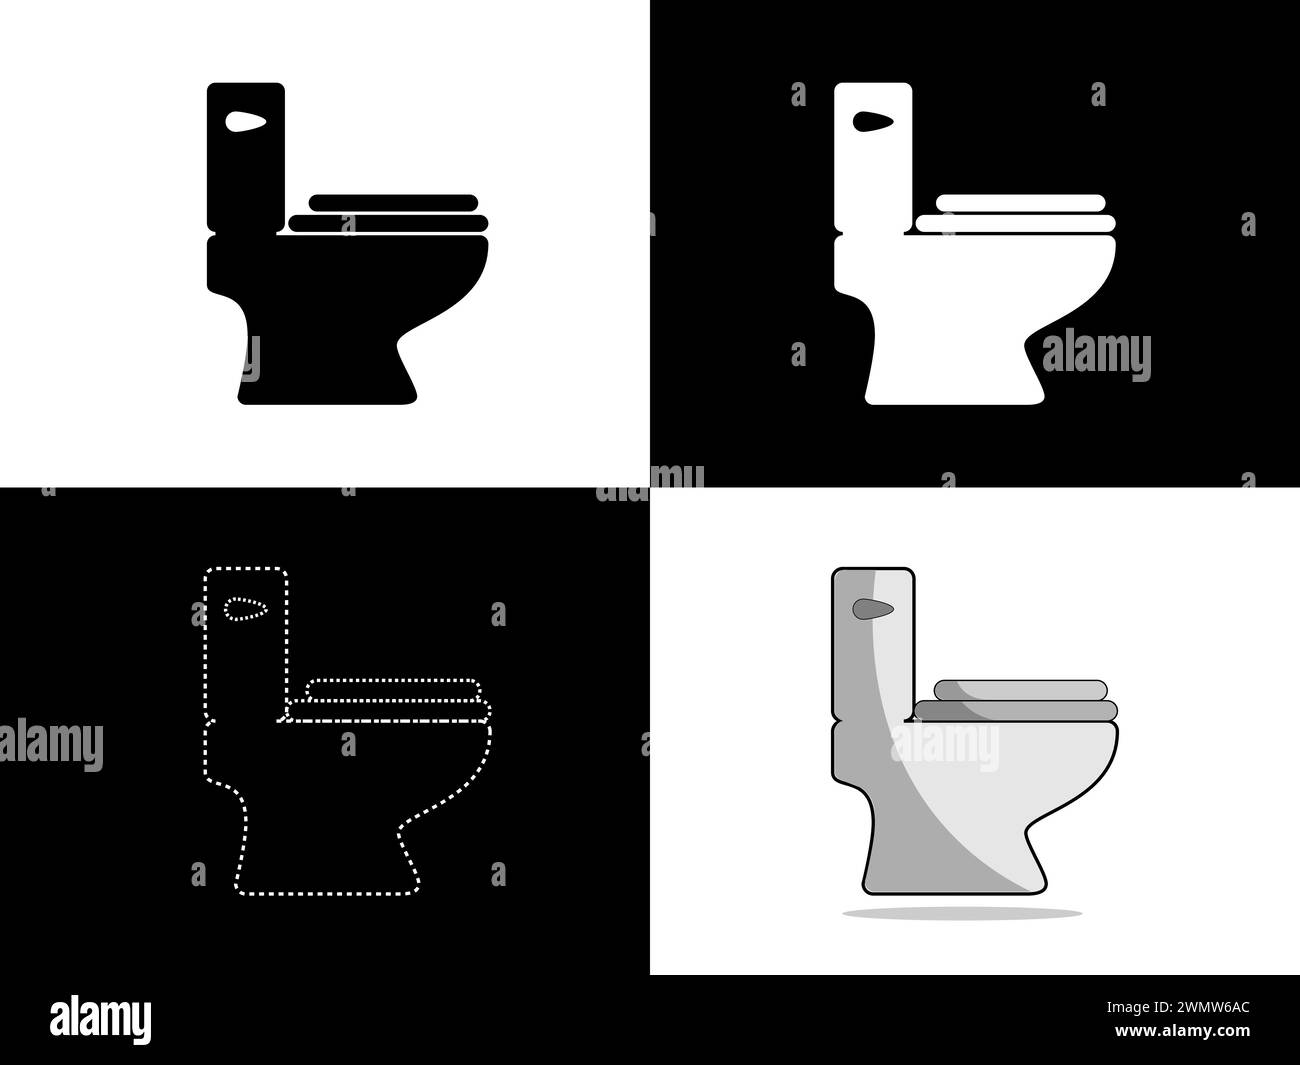 Art illustration design icon logo with silhouette concept symbol of toilet wc closet Stock Vector